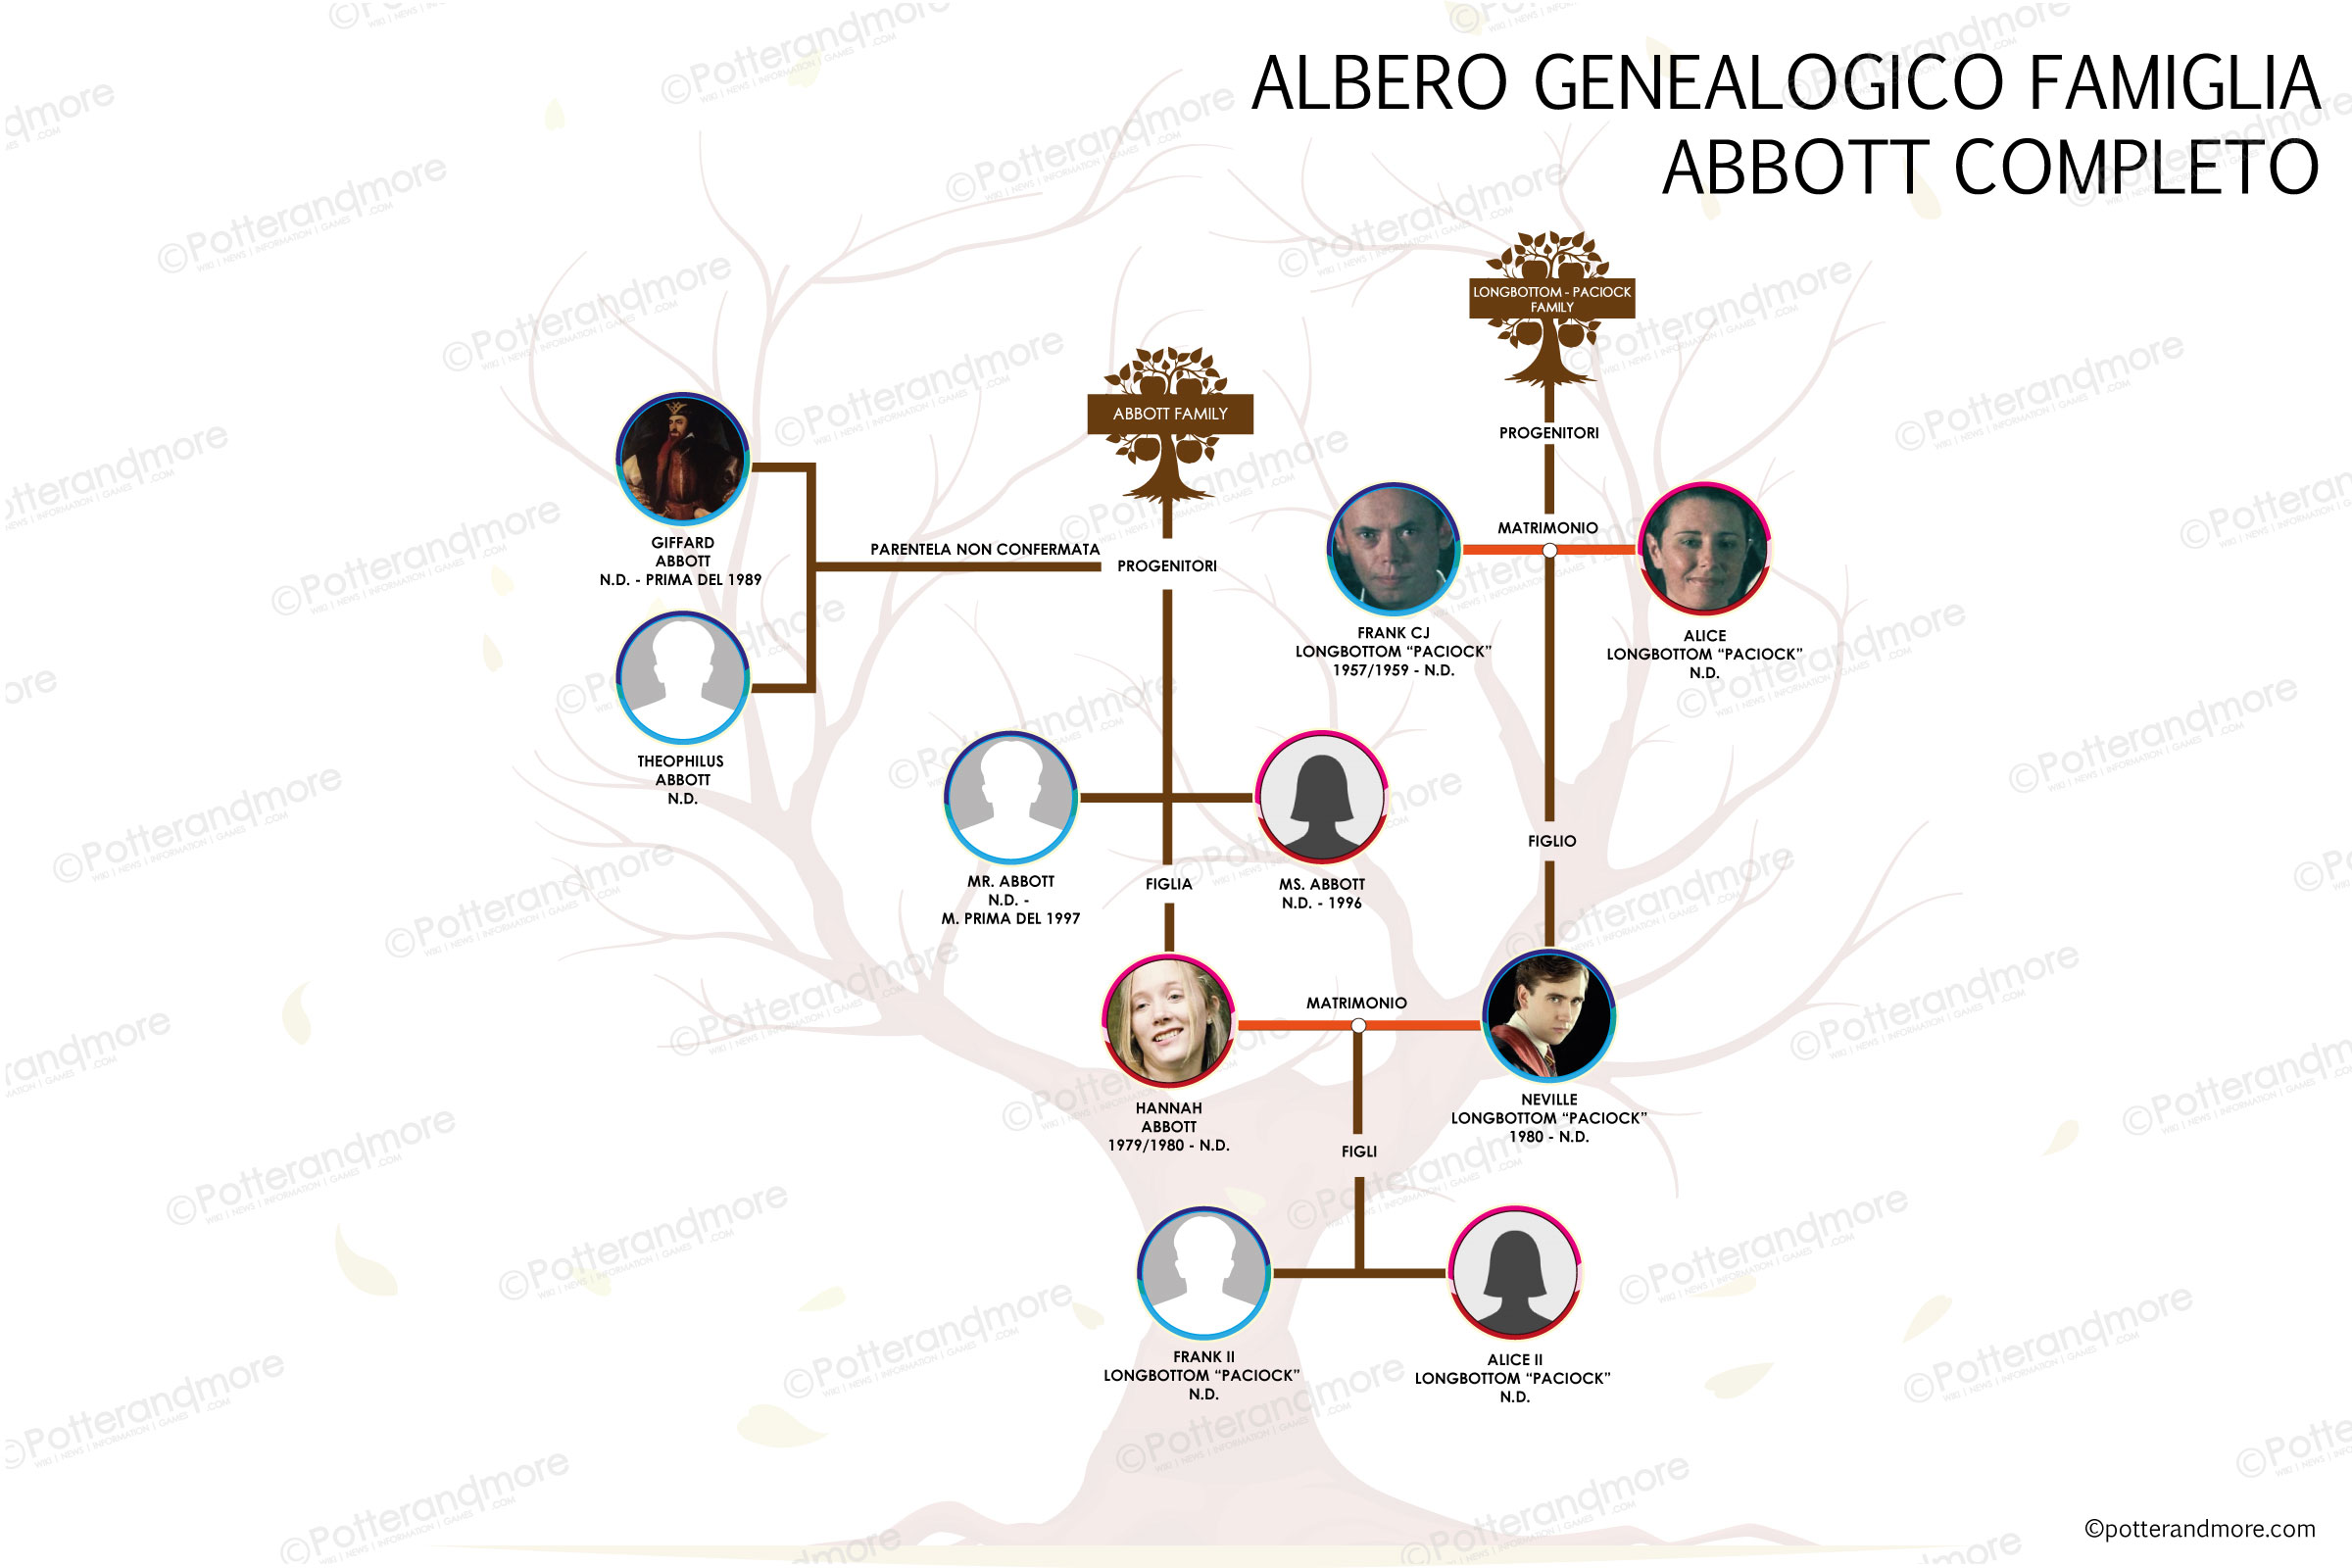 Albero Genealogico famiglia Abbott